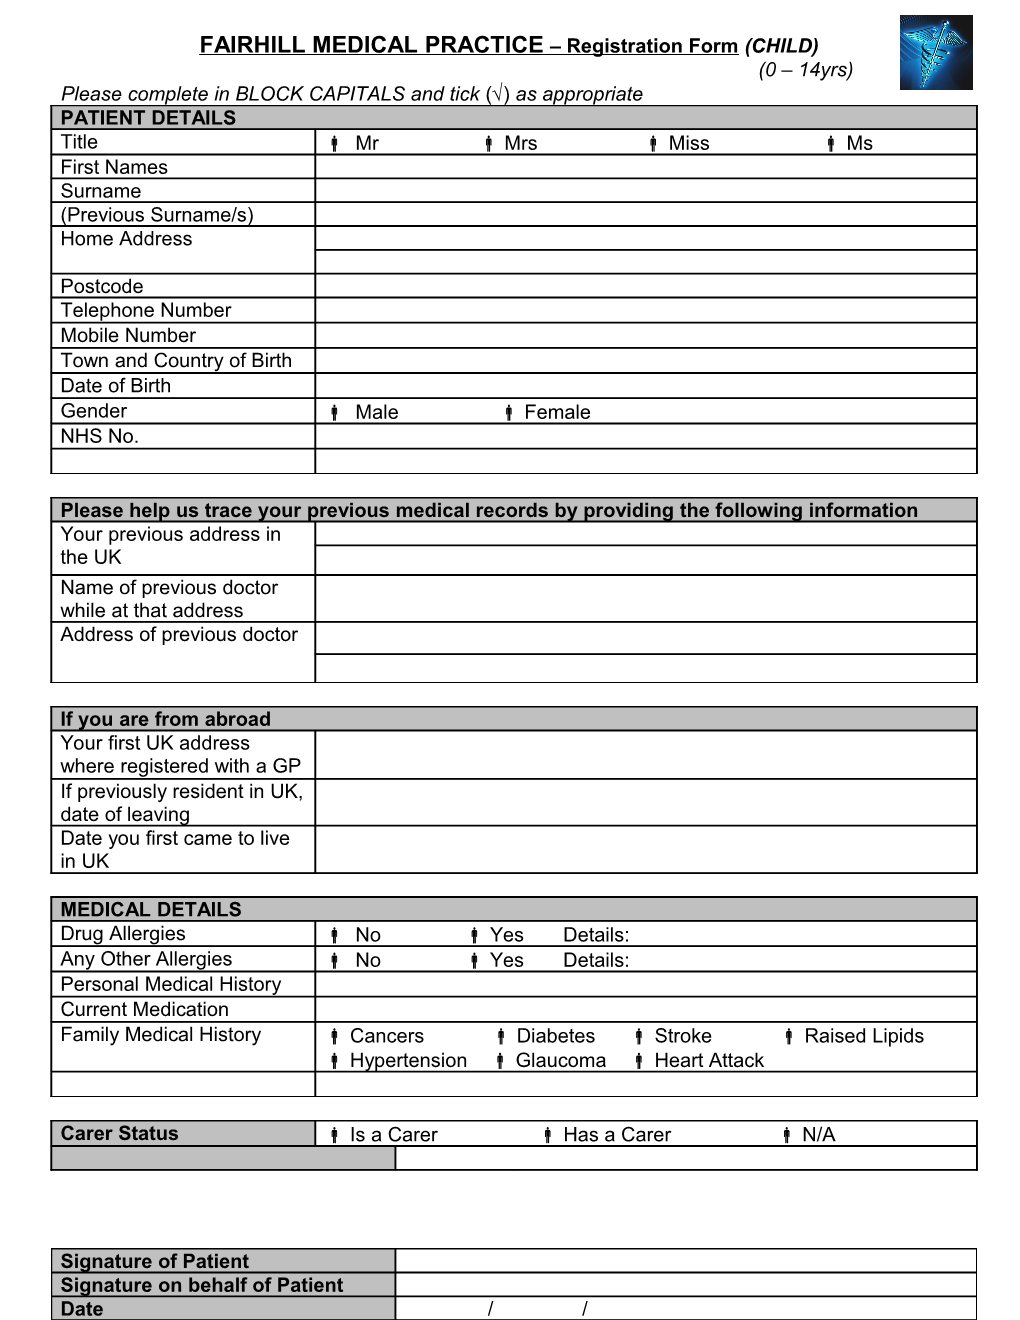 FAIRHILL MEDICAL PRACTICE Registration Form